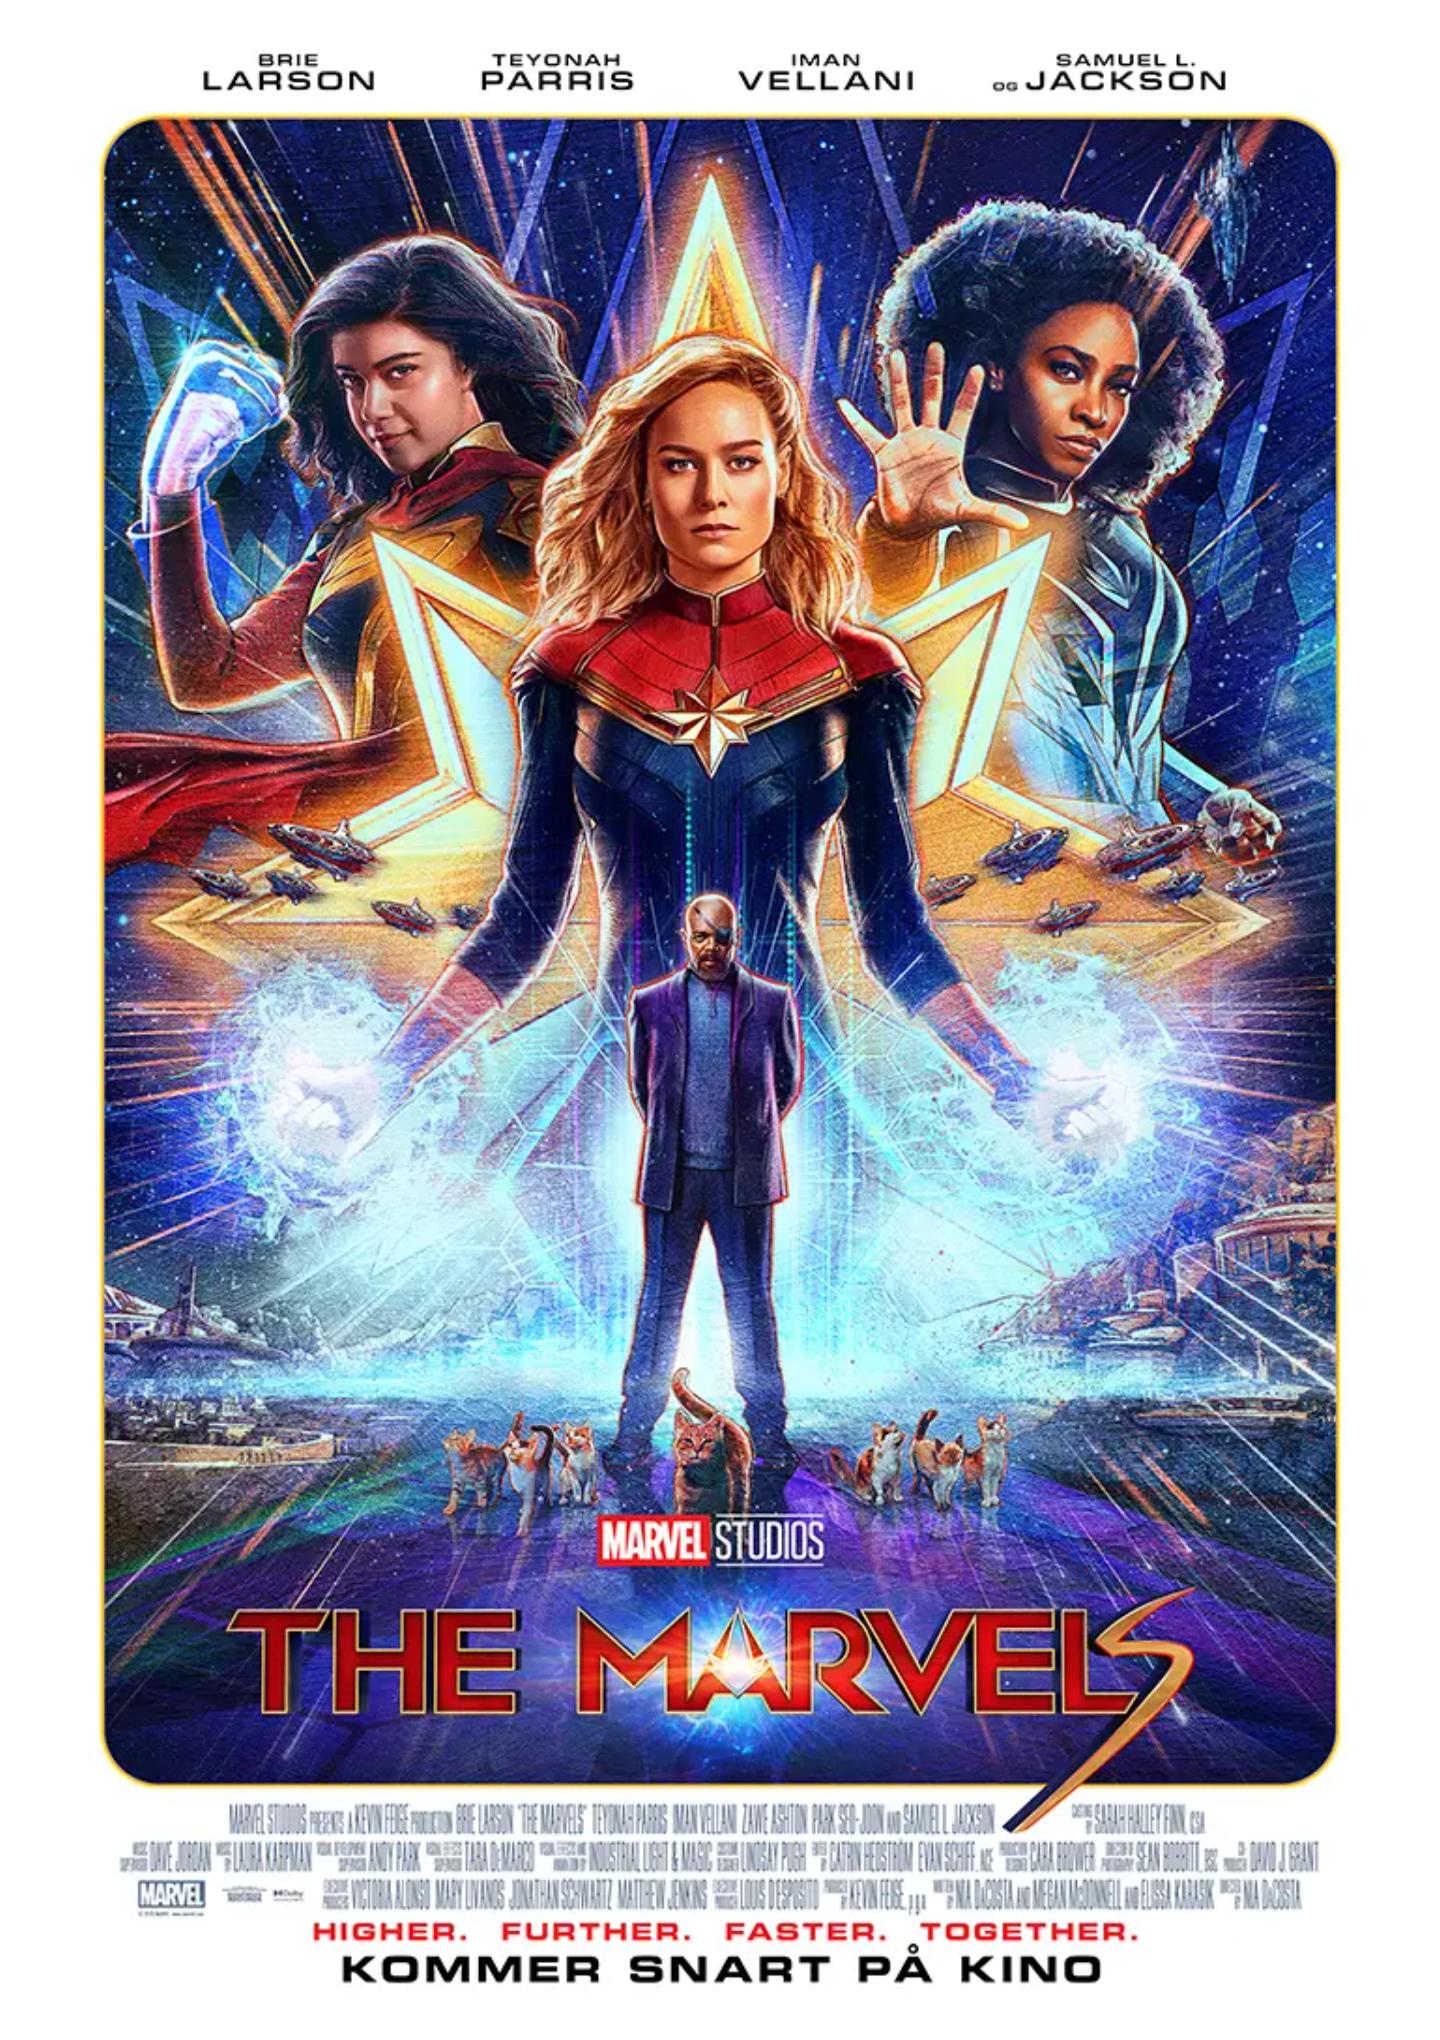 Plakat for 'The Marvels'